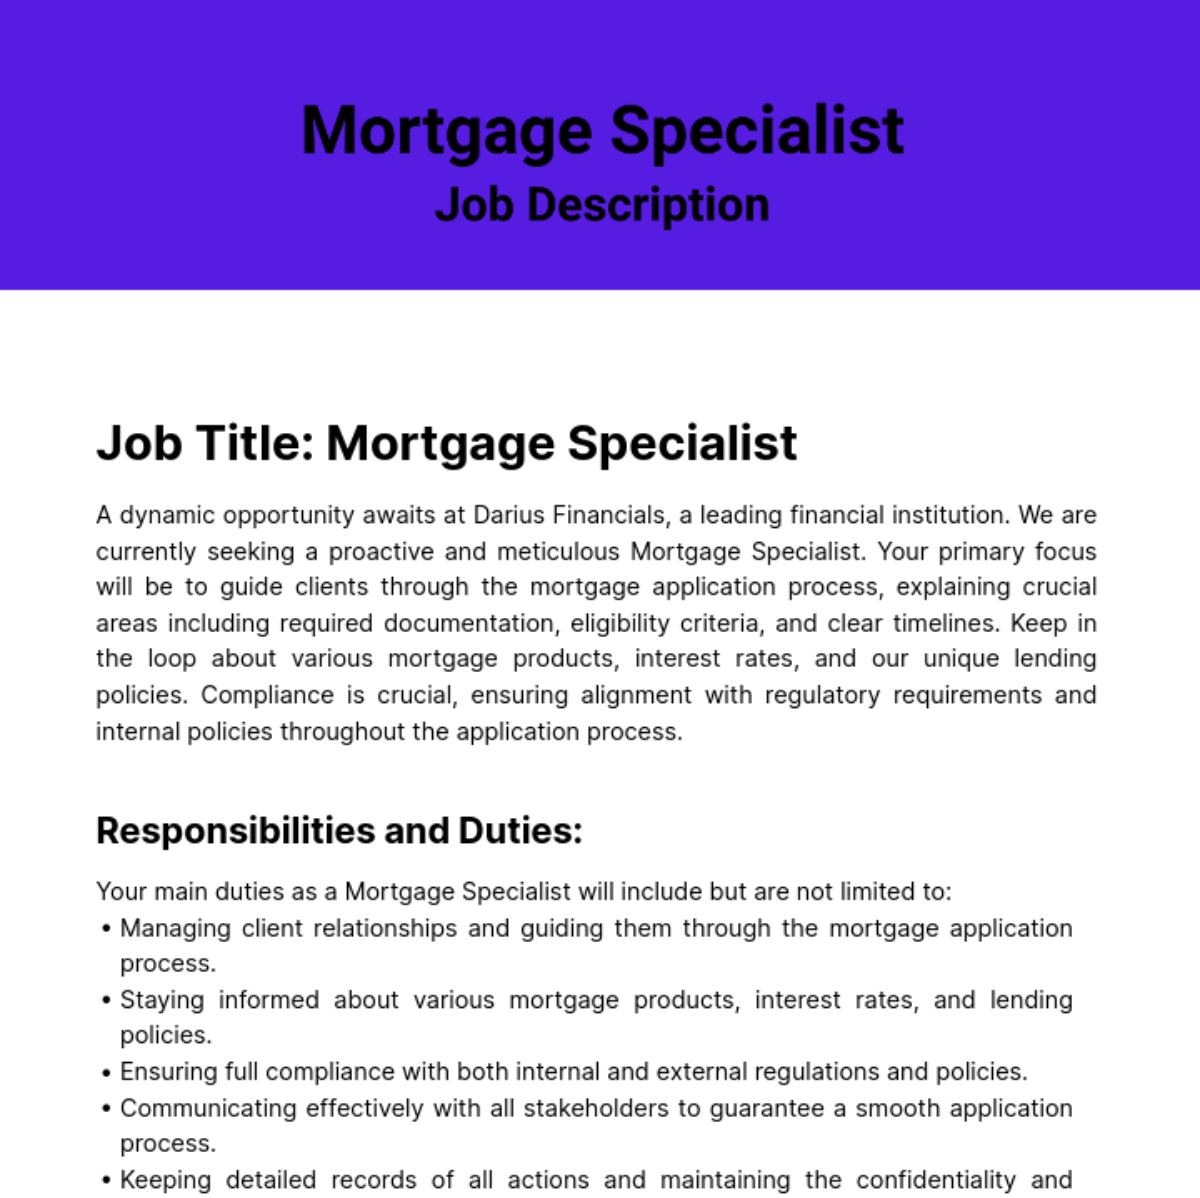 Mortgage Specialist Job Description Template